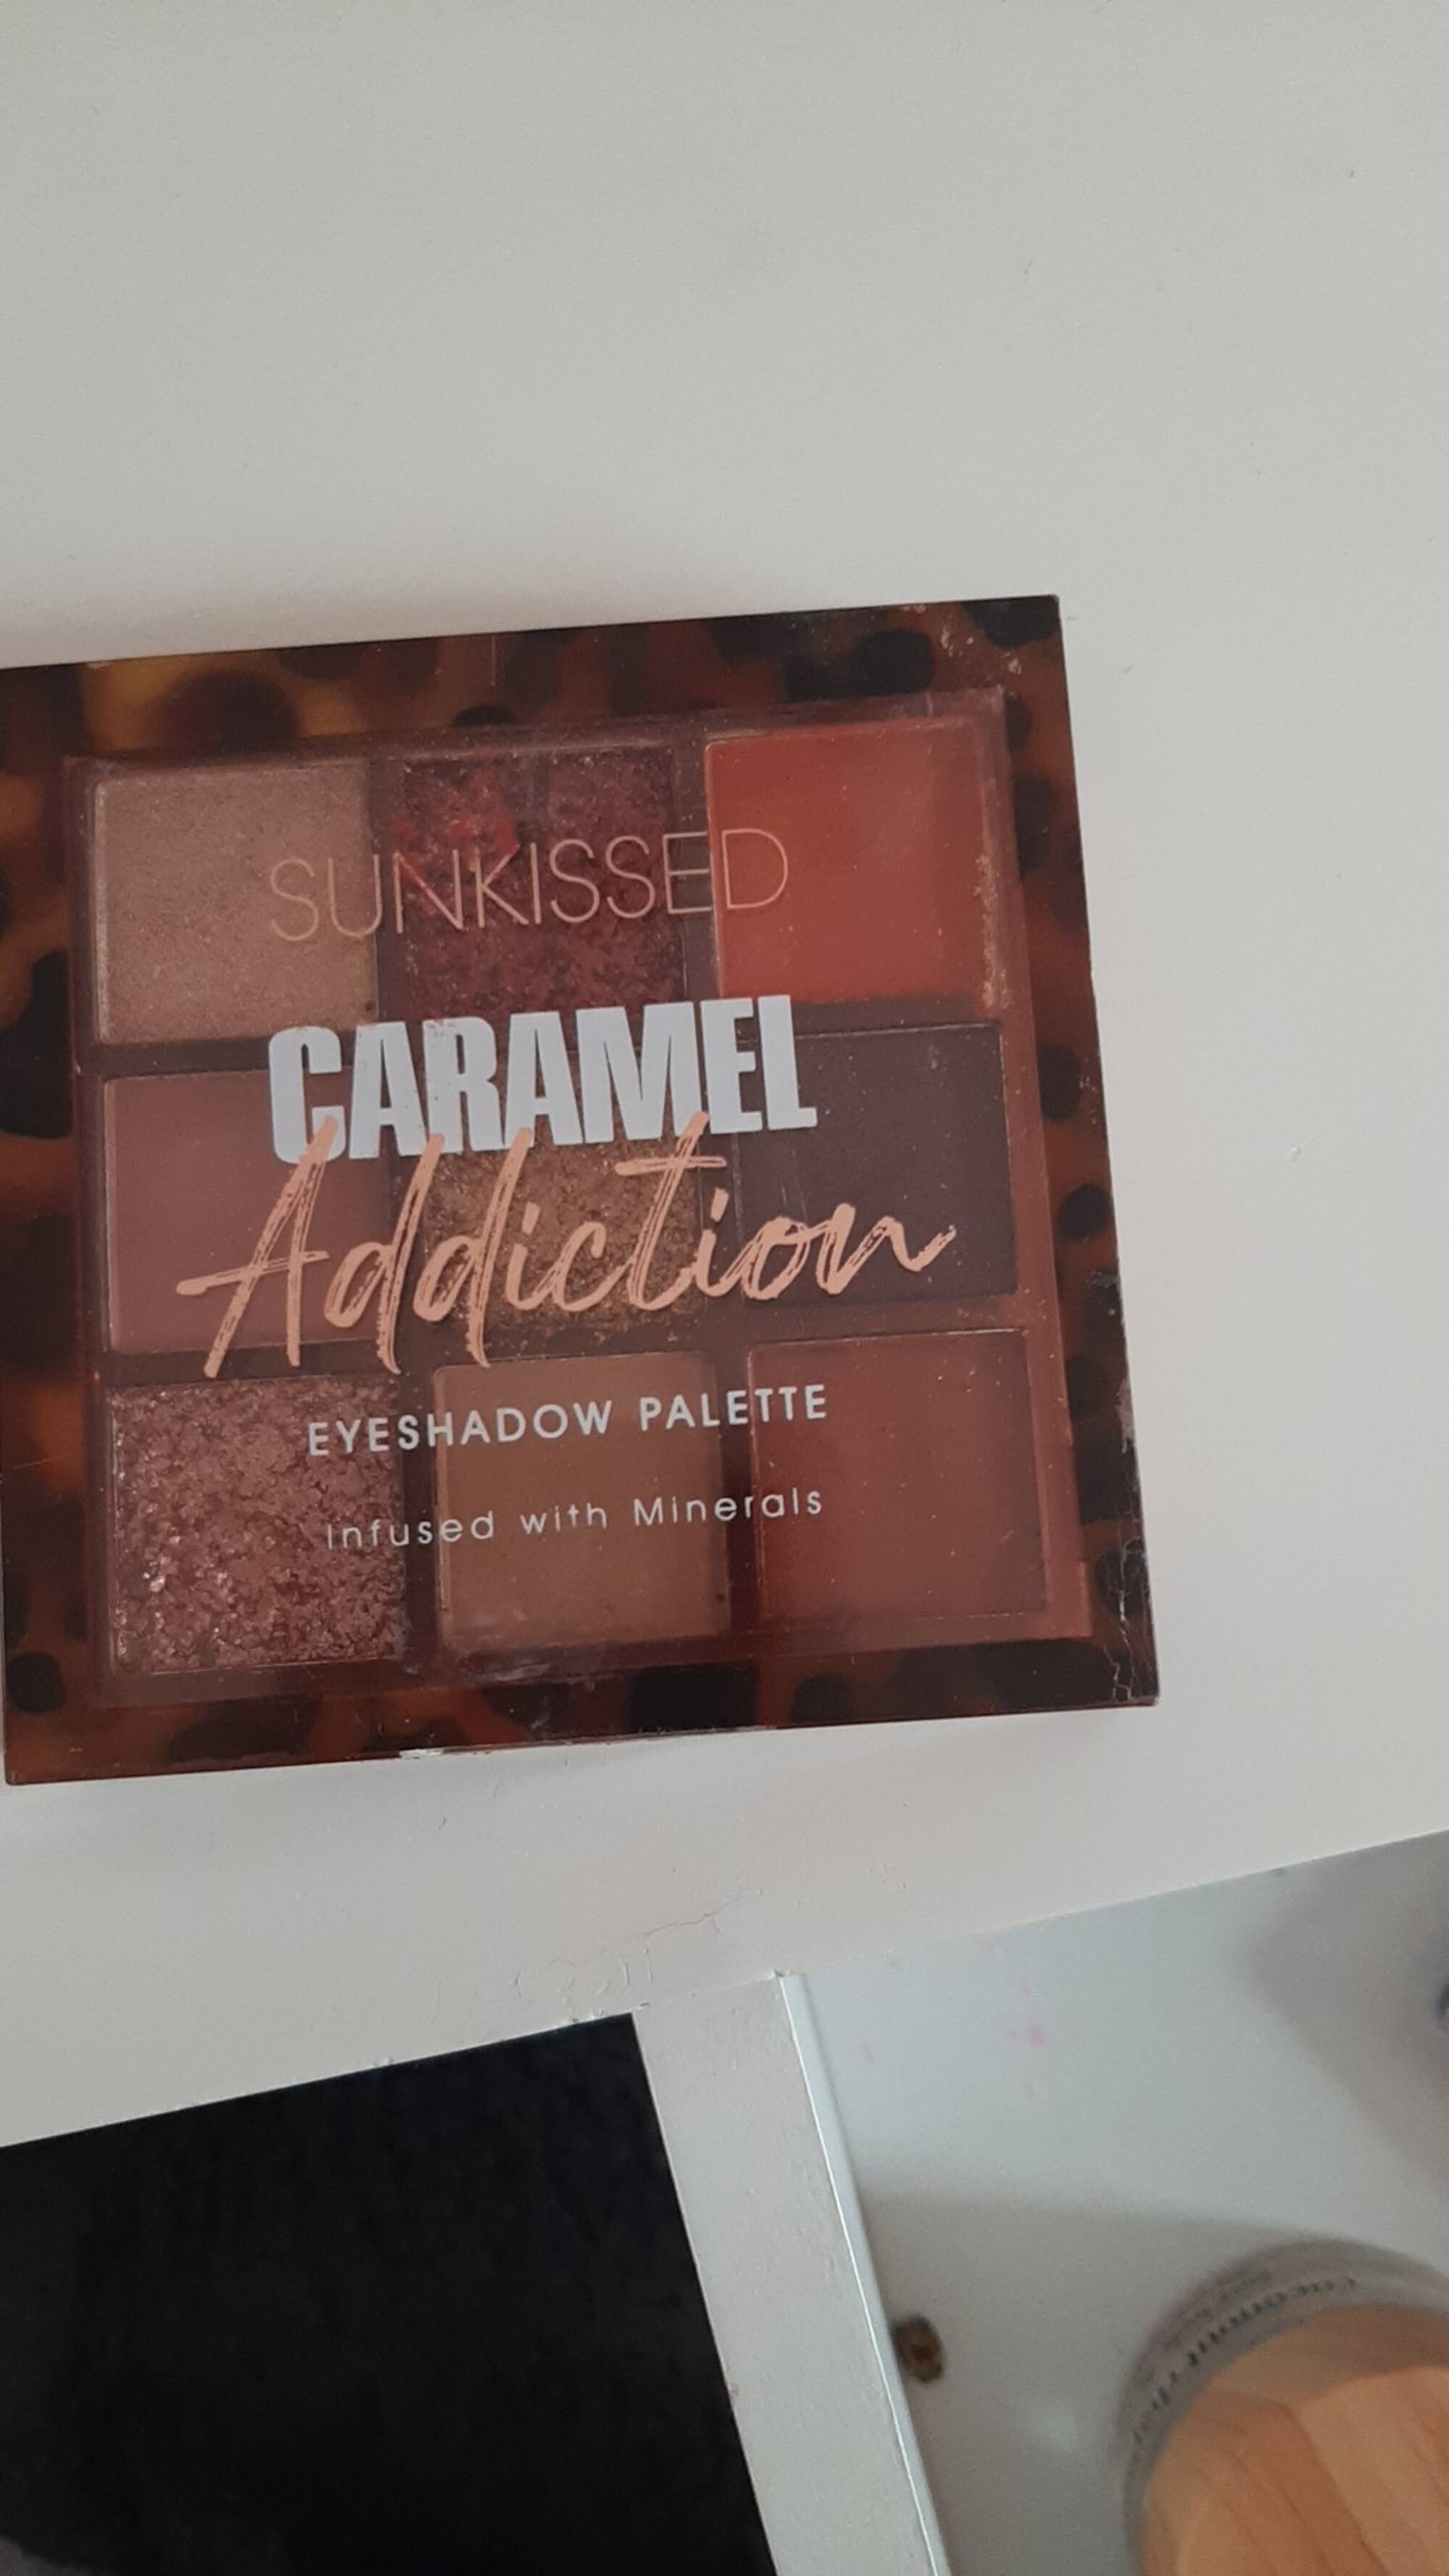 SUNKISSED - Caramel addiction - Eyeshadow palette